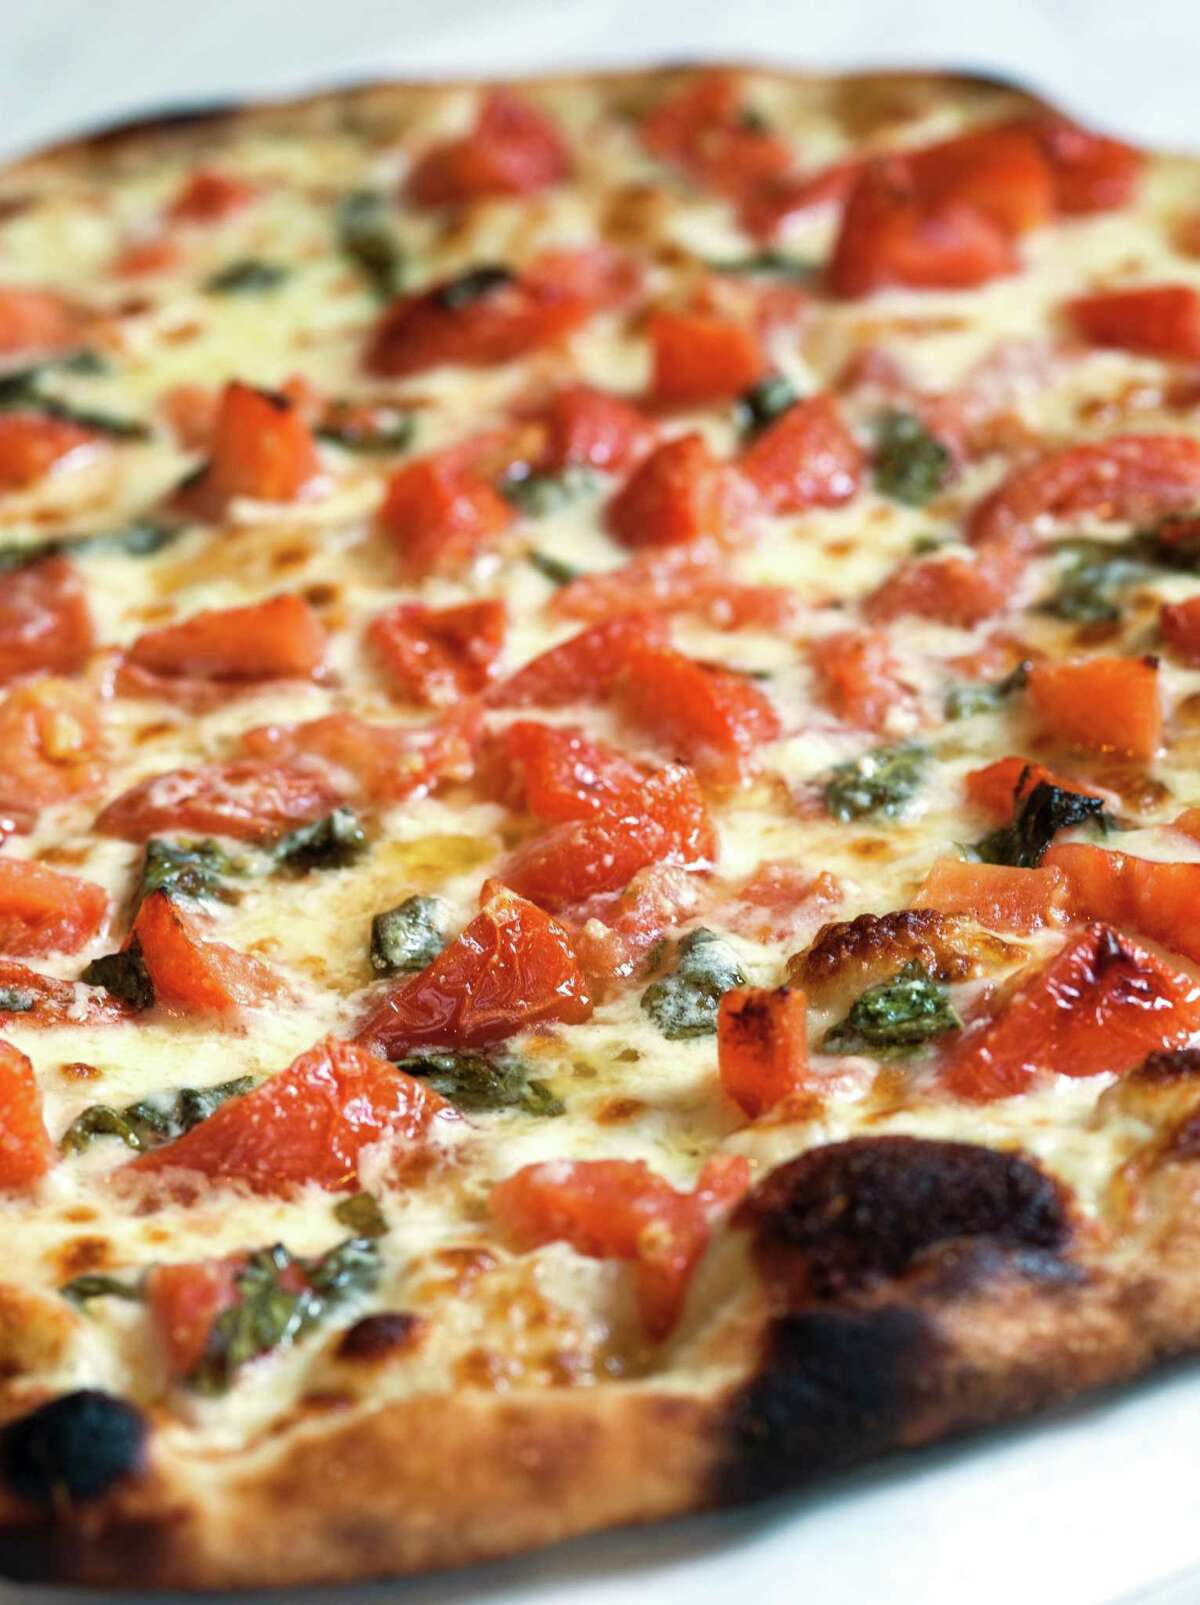 Frank Pepe Pizzeria Napoletana is bringing back the fresh tomato pie for summer 2022.